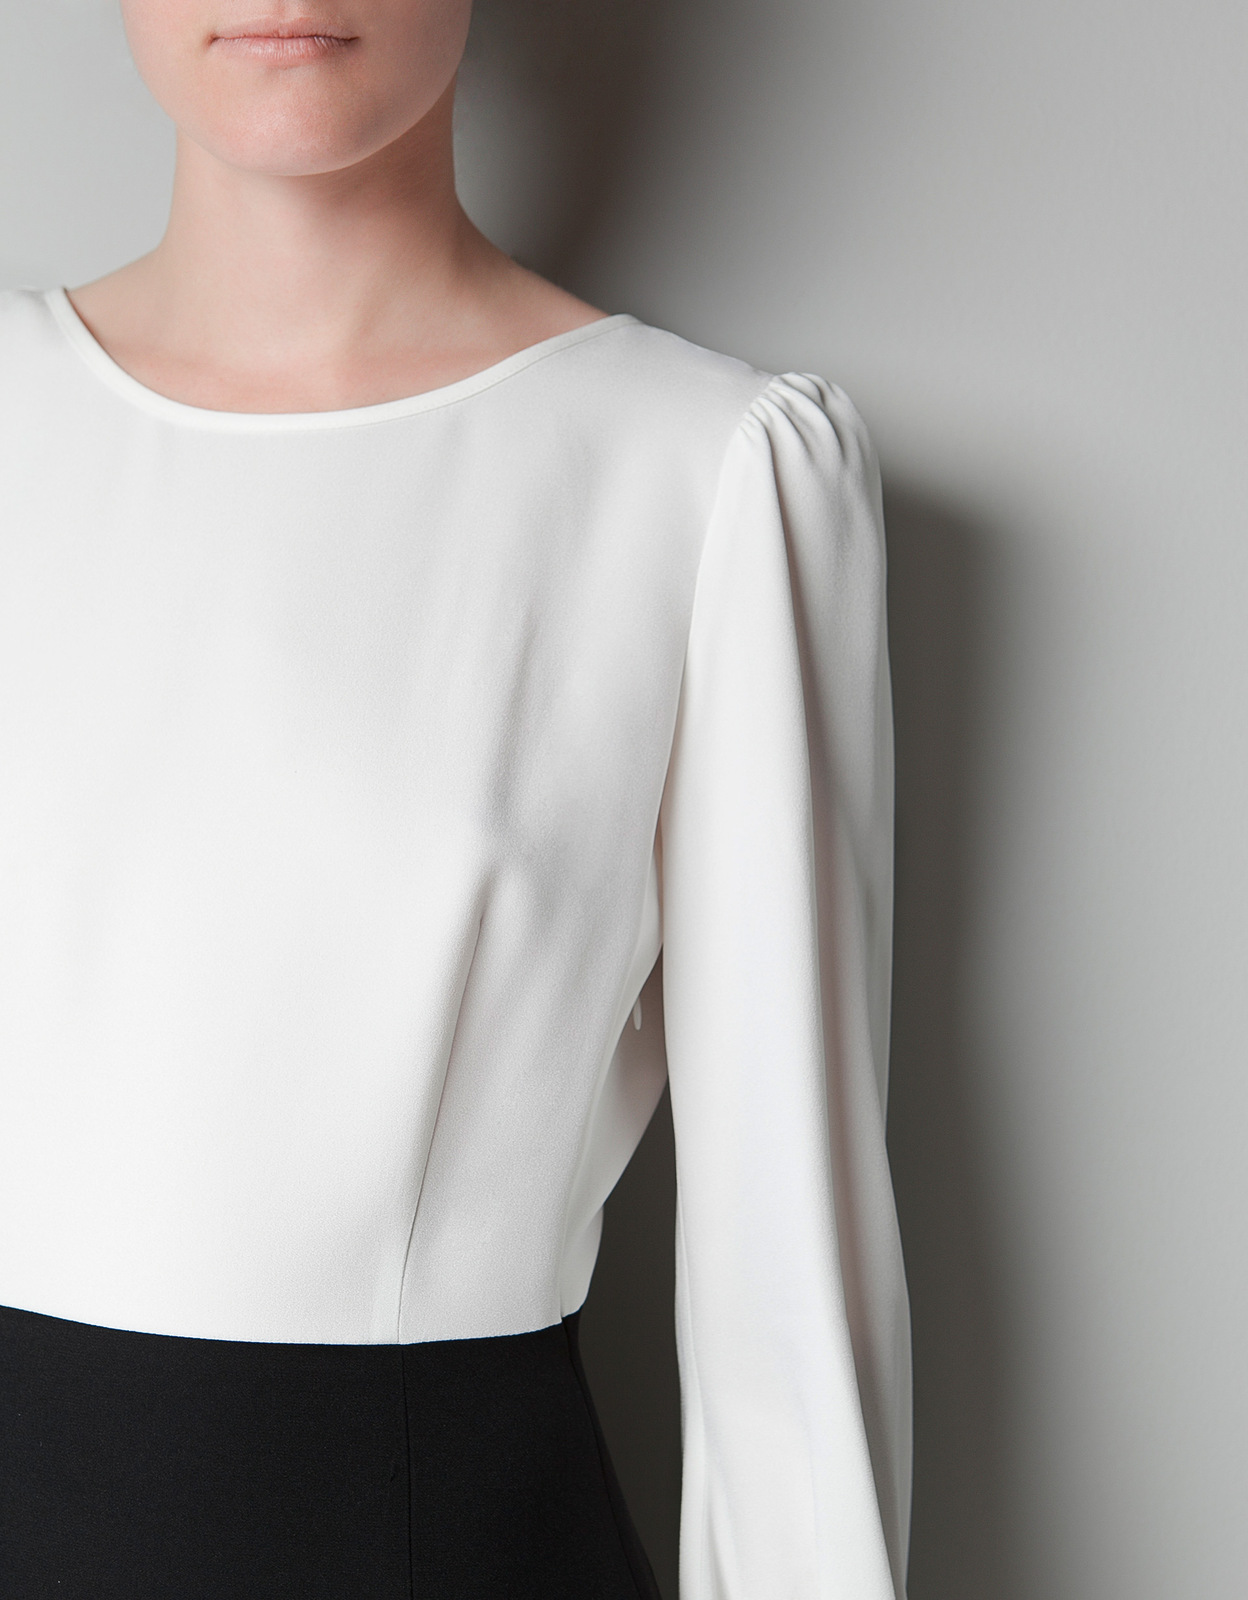 Zara fekete-fehér ruha 2012.10.21 #20250 fotója